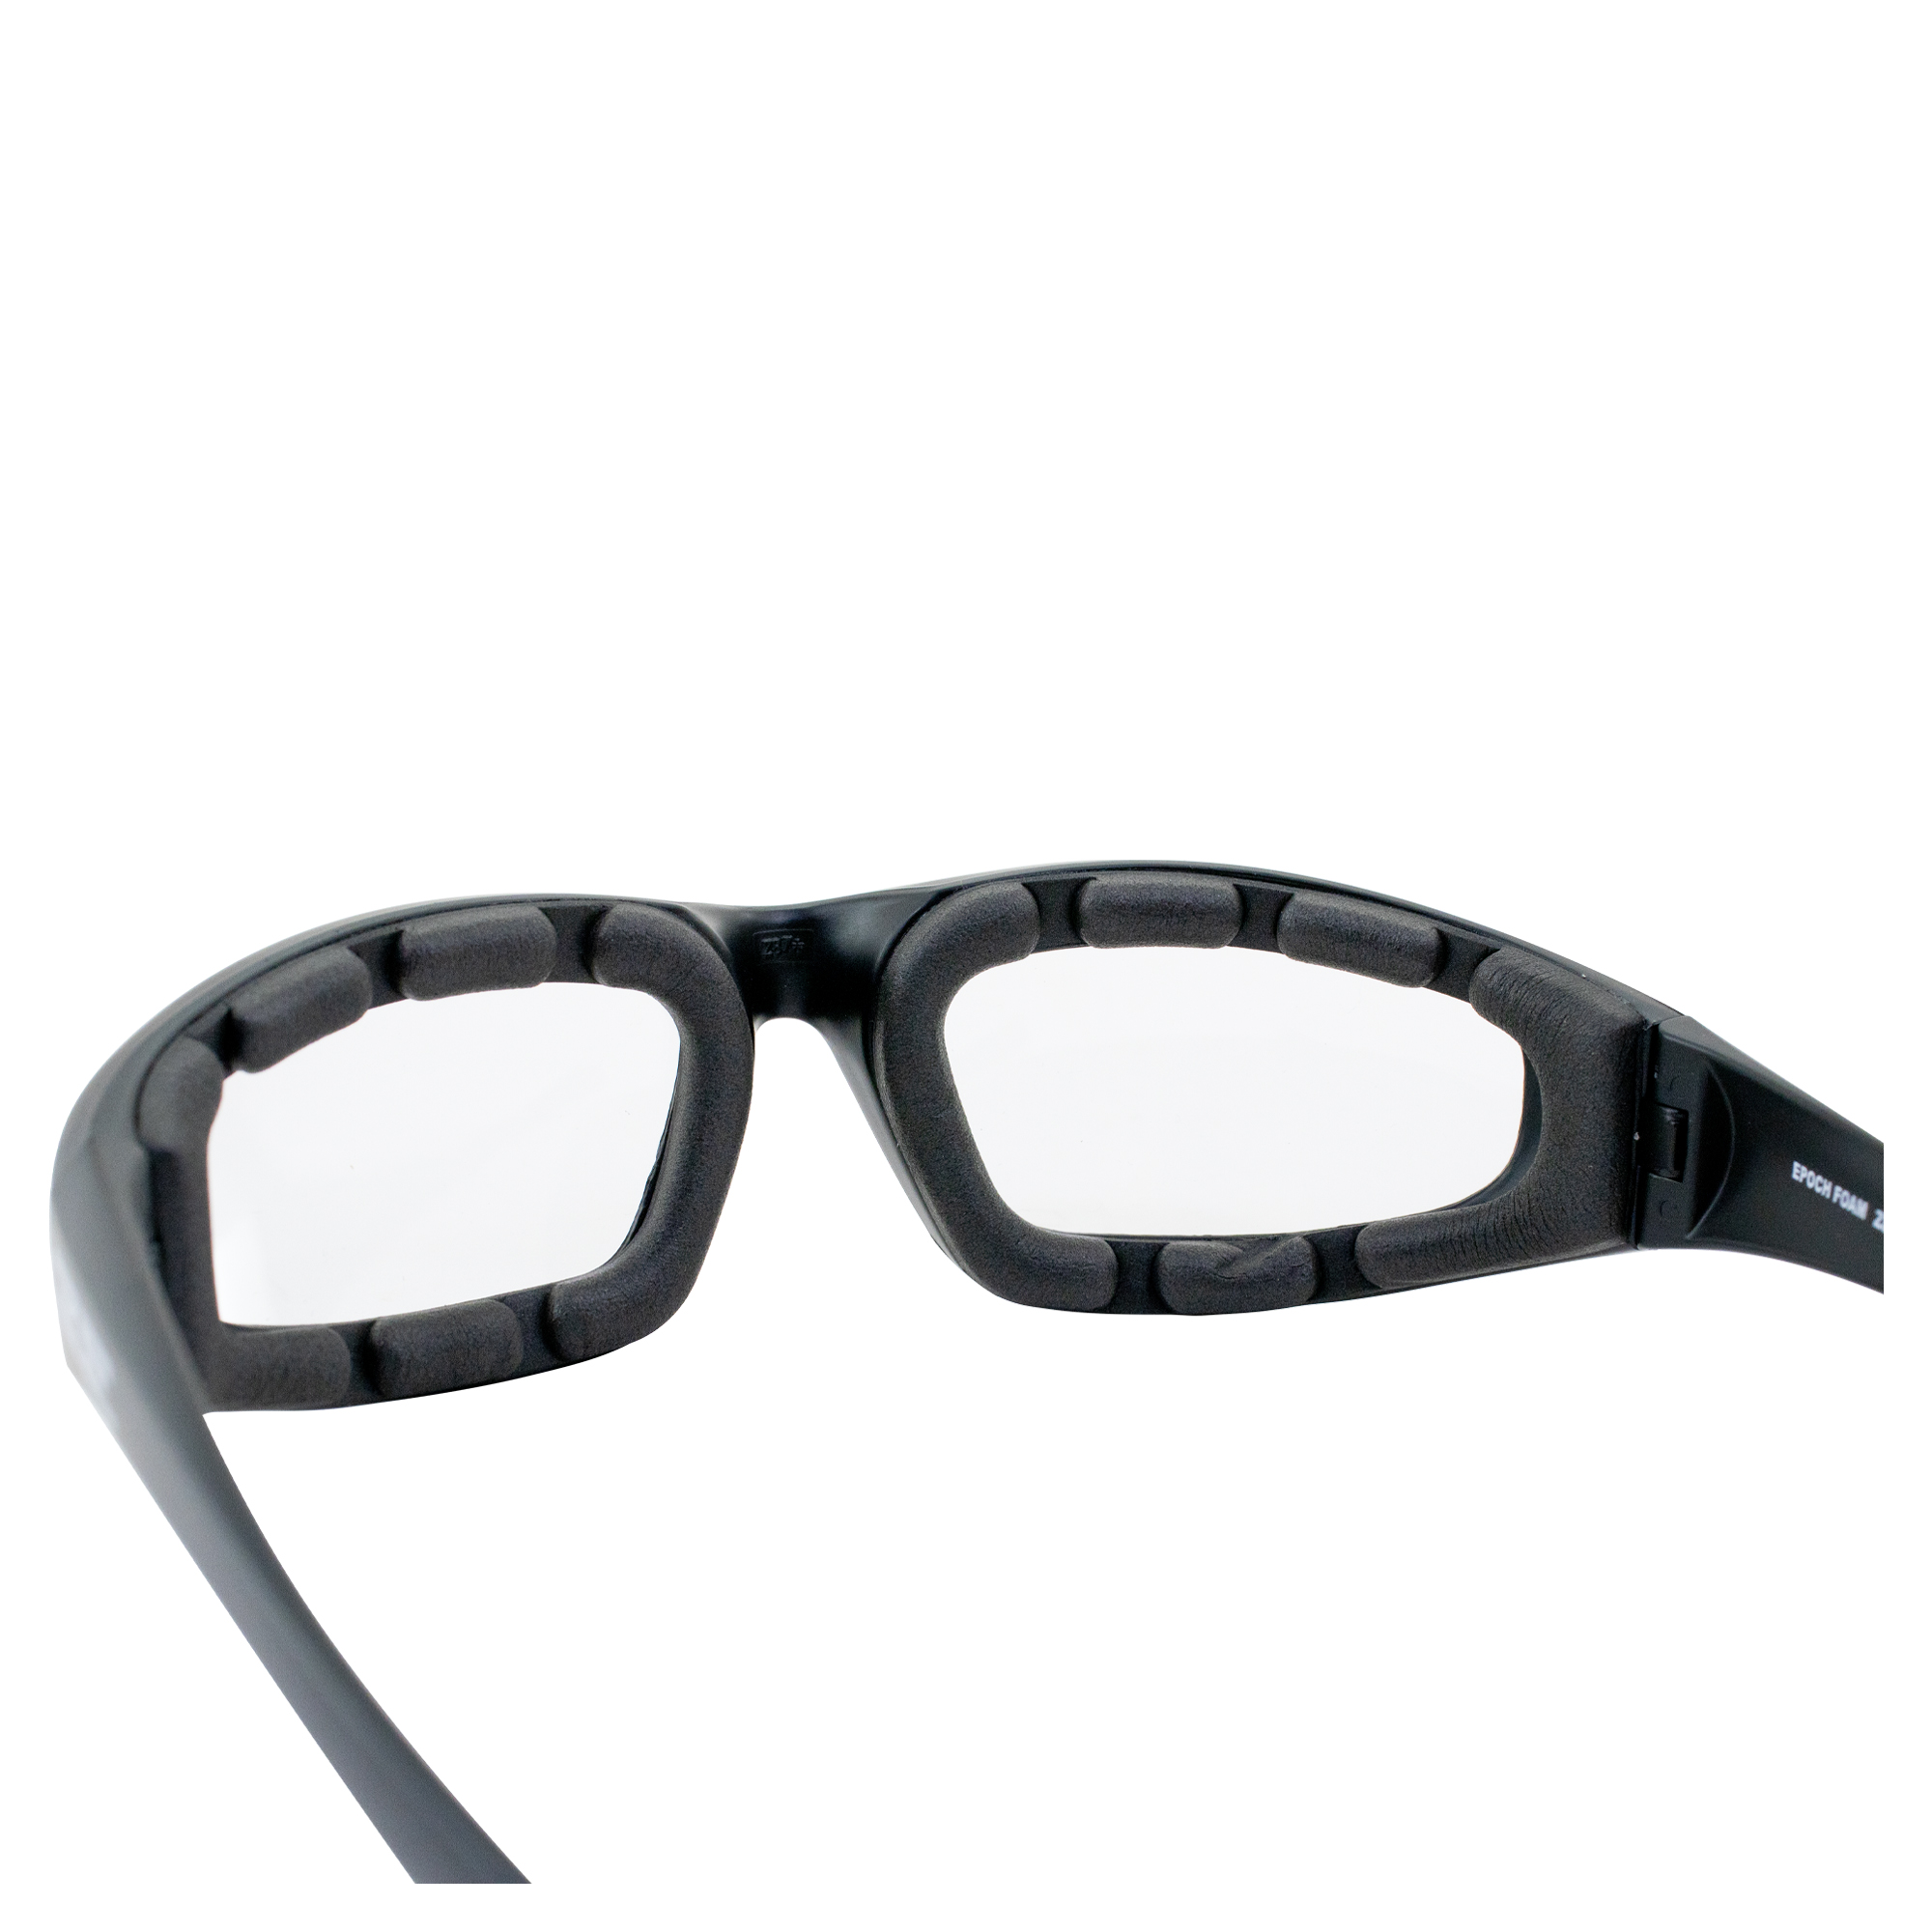 EPOCH Padded Motorcycle Sunglasses Black Frames Clear Lens ANSI Z87.1+ - image 5 of 8